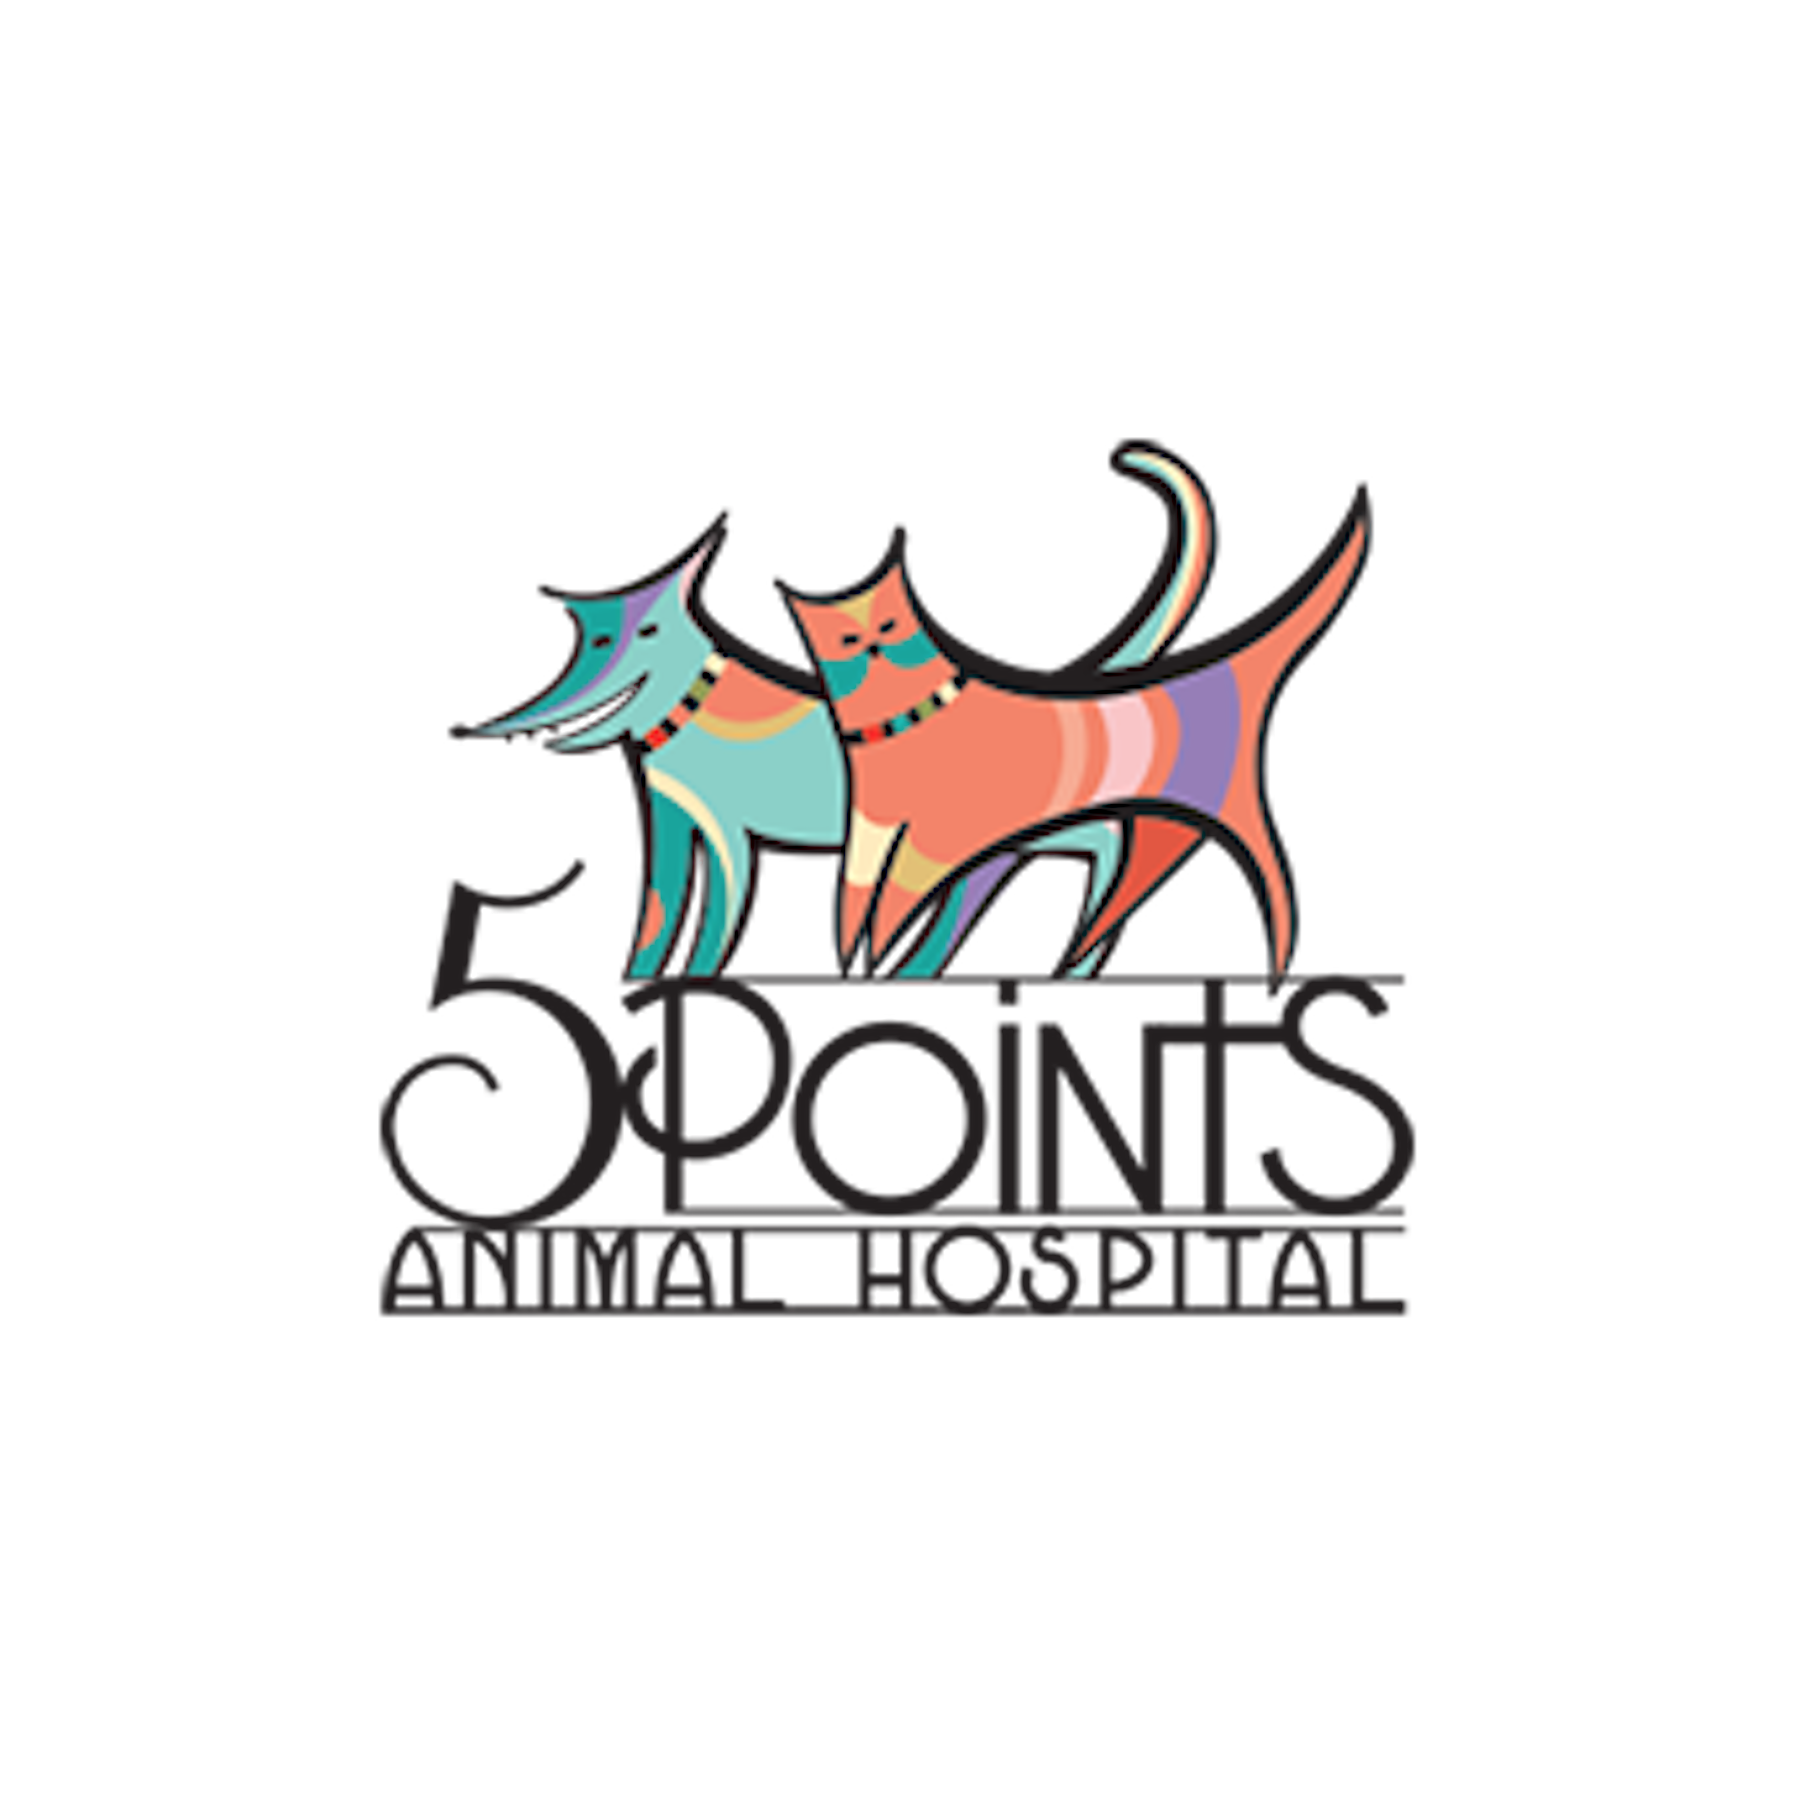 5 Points Animal Hospital - Nashville, TN 37206 - (615)750-2377 | ShowMeLocal.com